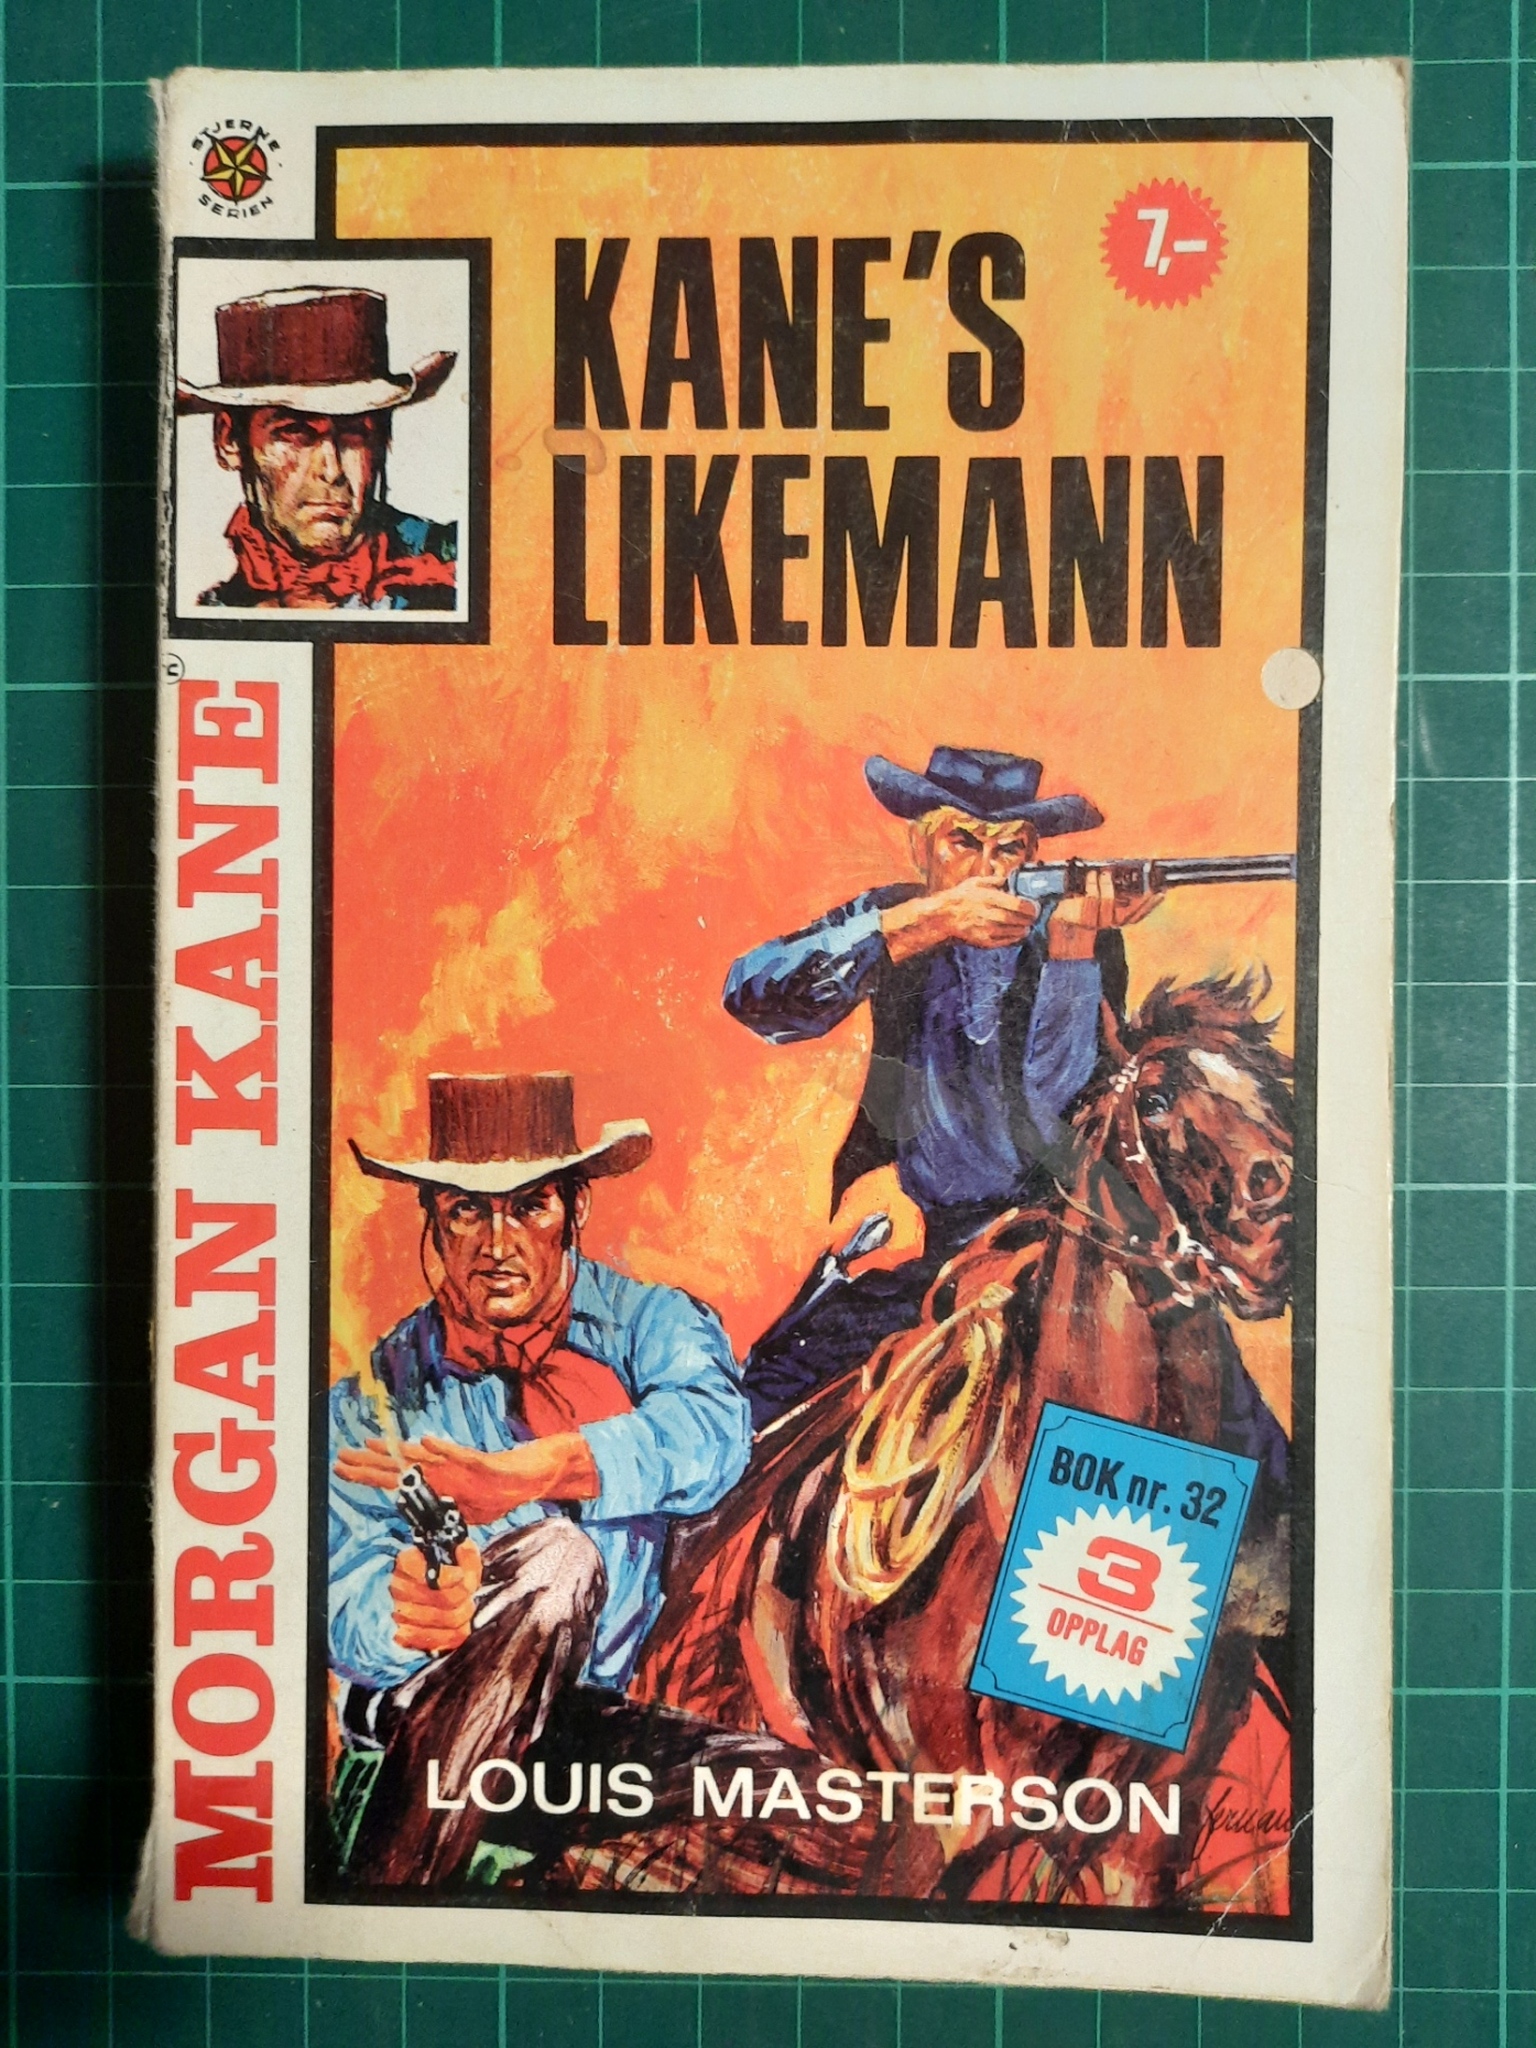 Morgan Kane pocket 32 Kane's likemann